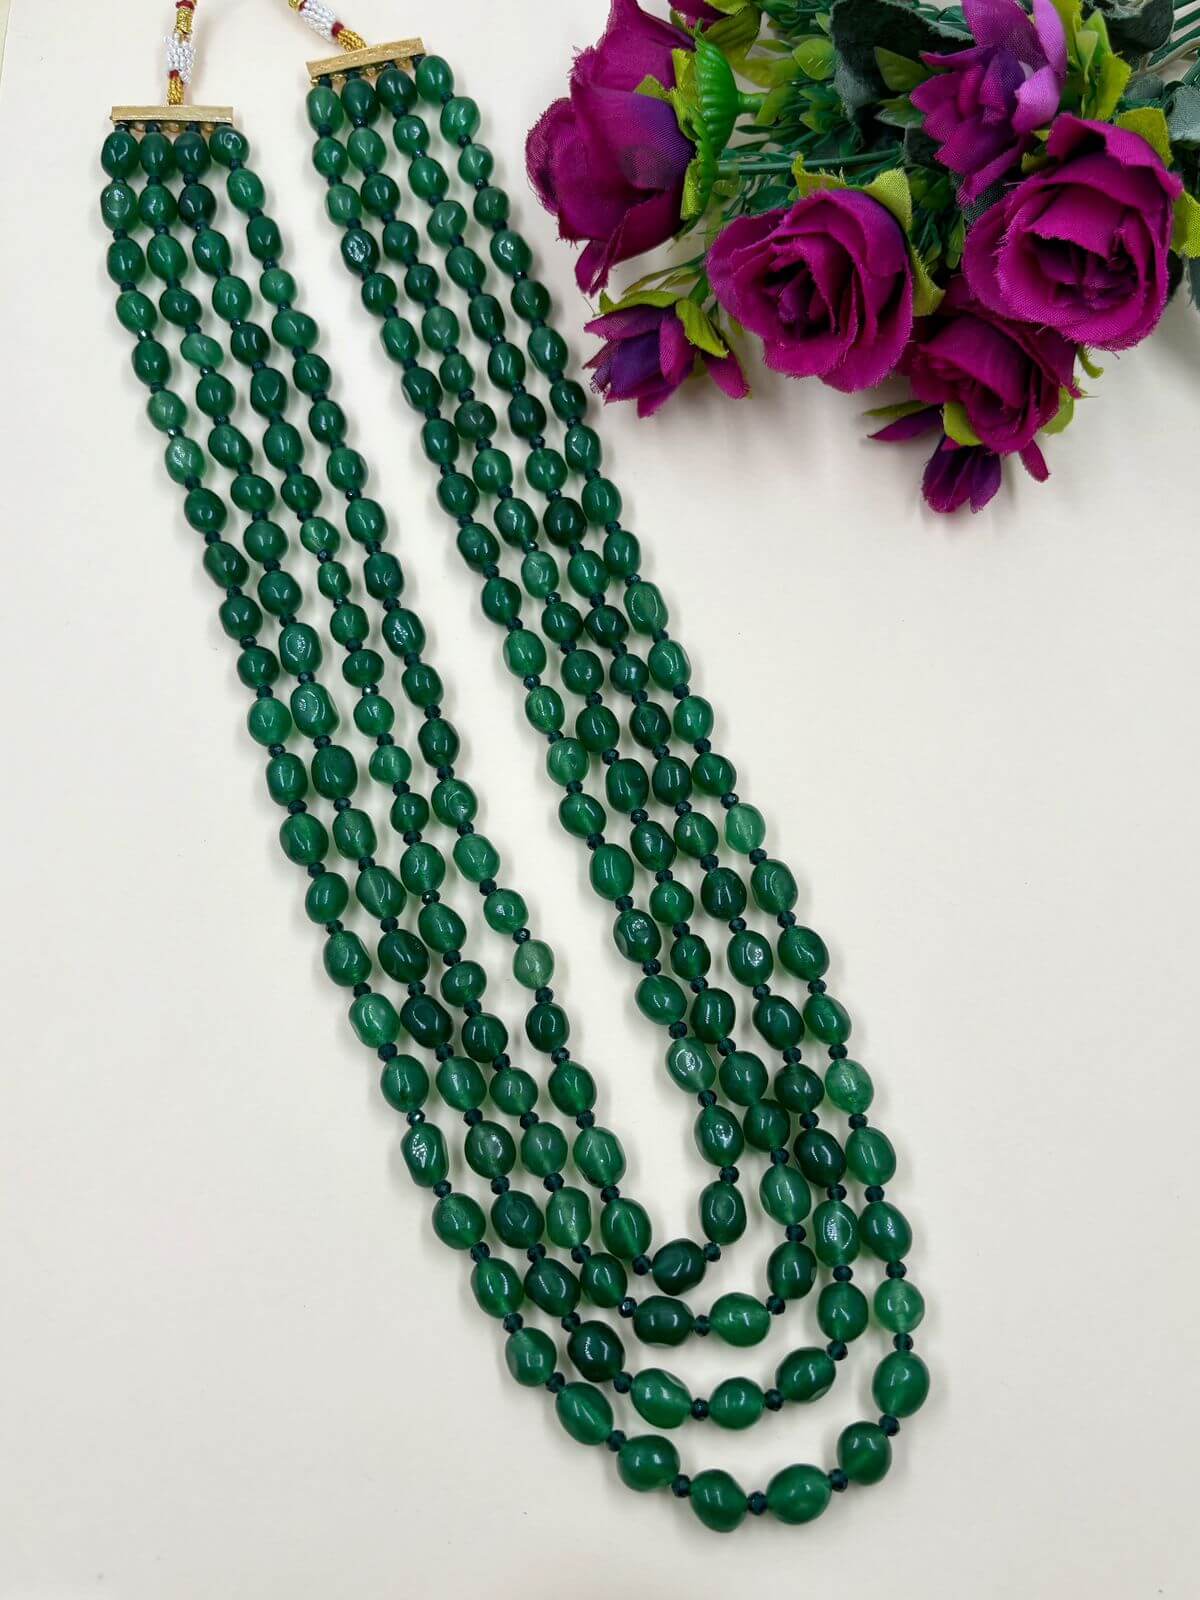 Buy 6MM Emerald jade Beads & Silver Beads Necklace, Micro cut Faceted  Emerald beads Necklace, Emerald Zambian Gemstones Handmade Necklace, May  Birthstone at Amazon.in